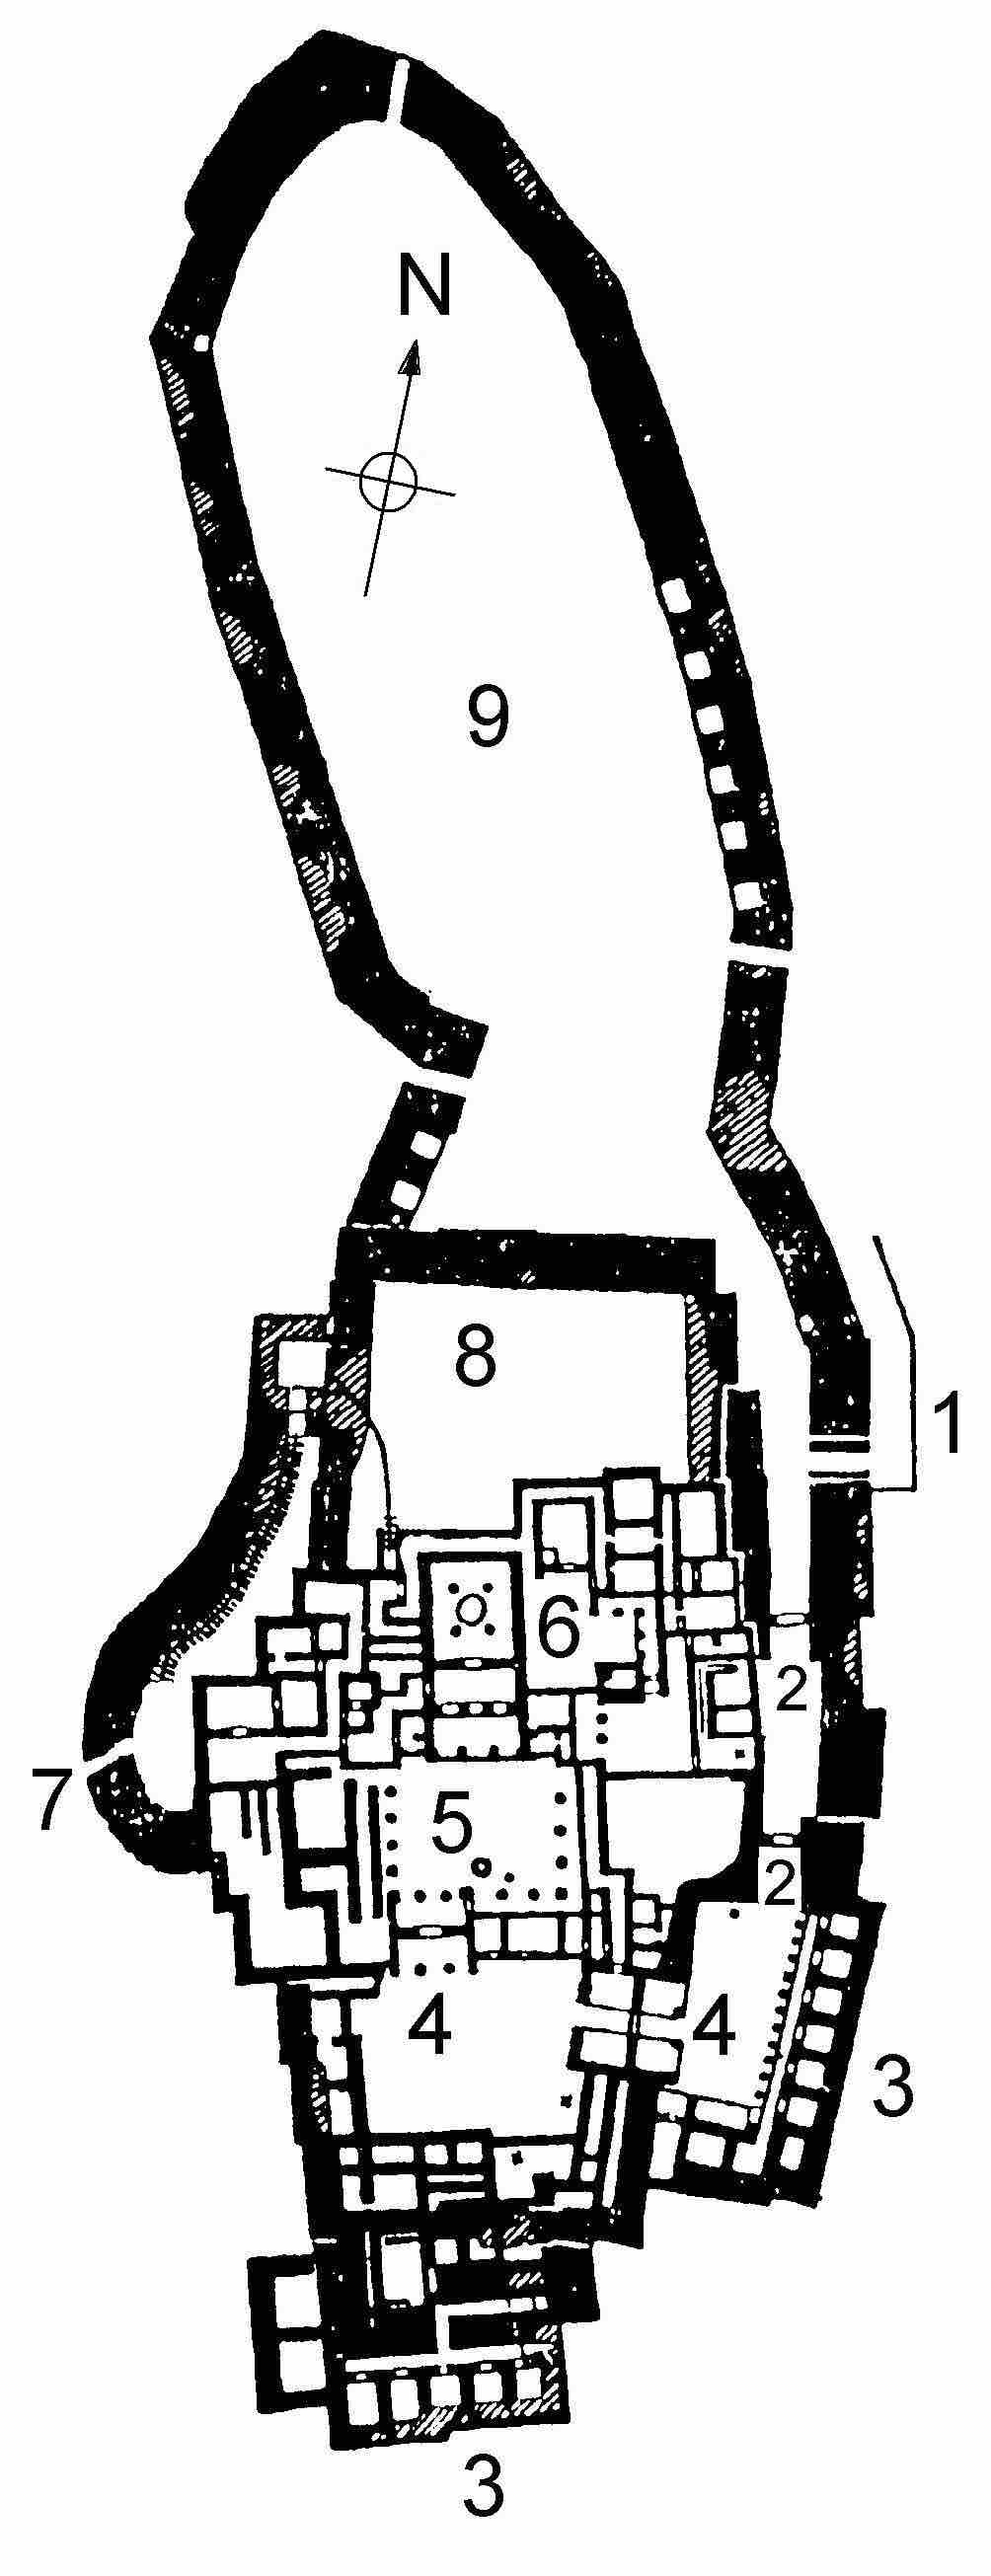 Ground plan of the citadel of Tiryns. c. 1400-1200 BCE. Tiryns, Greece.